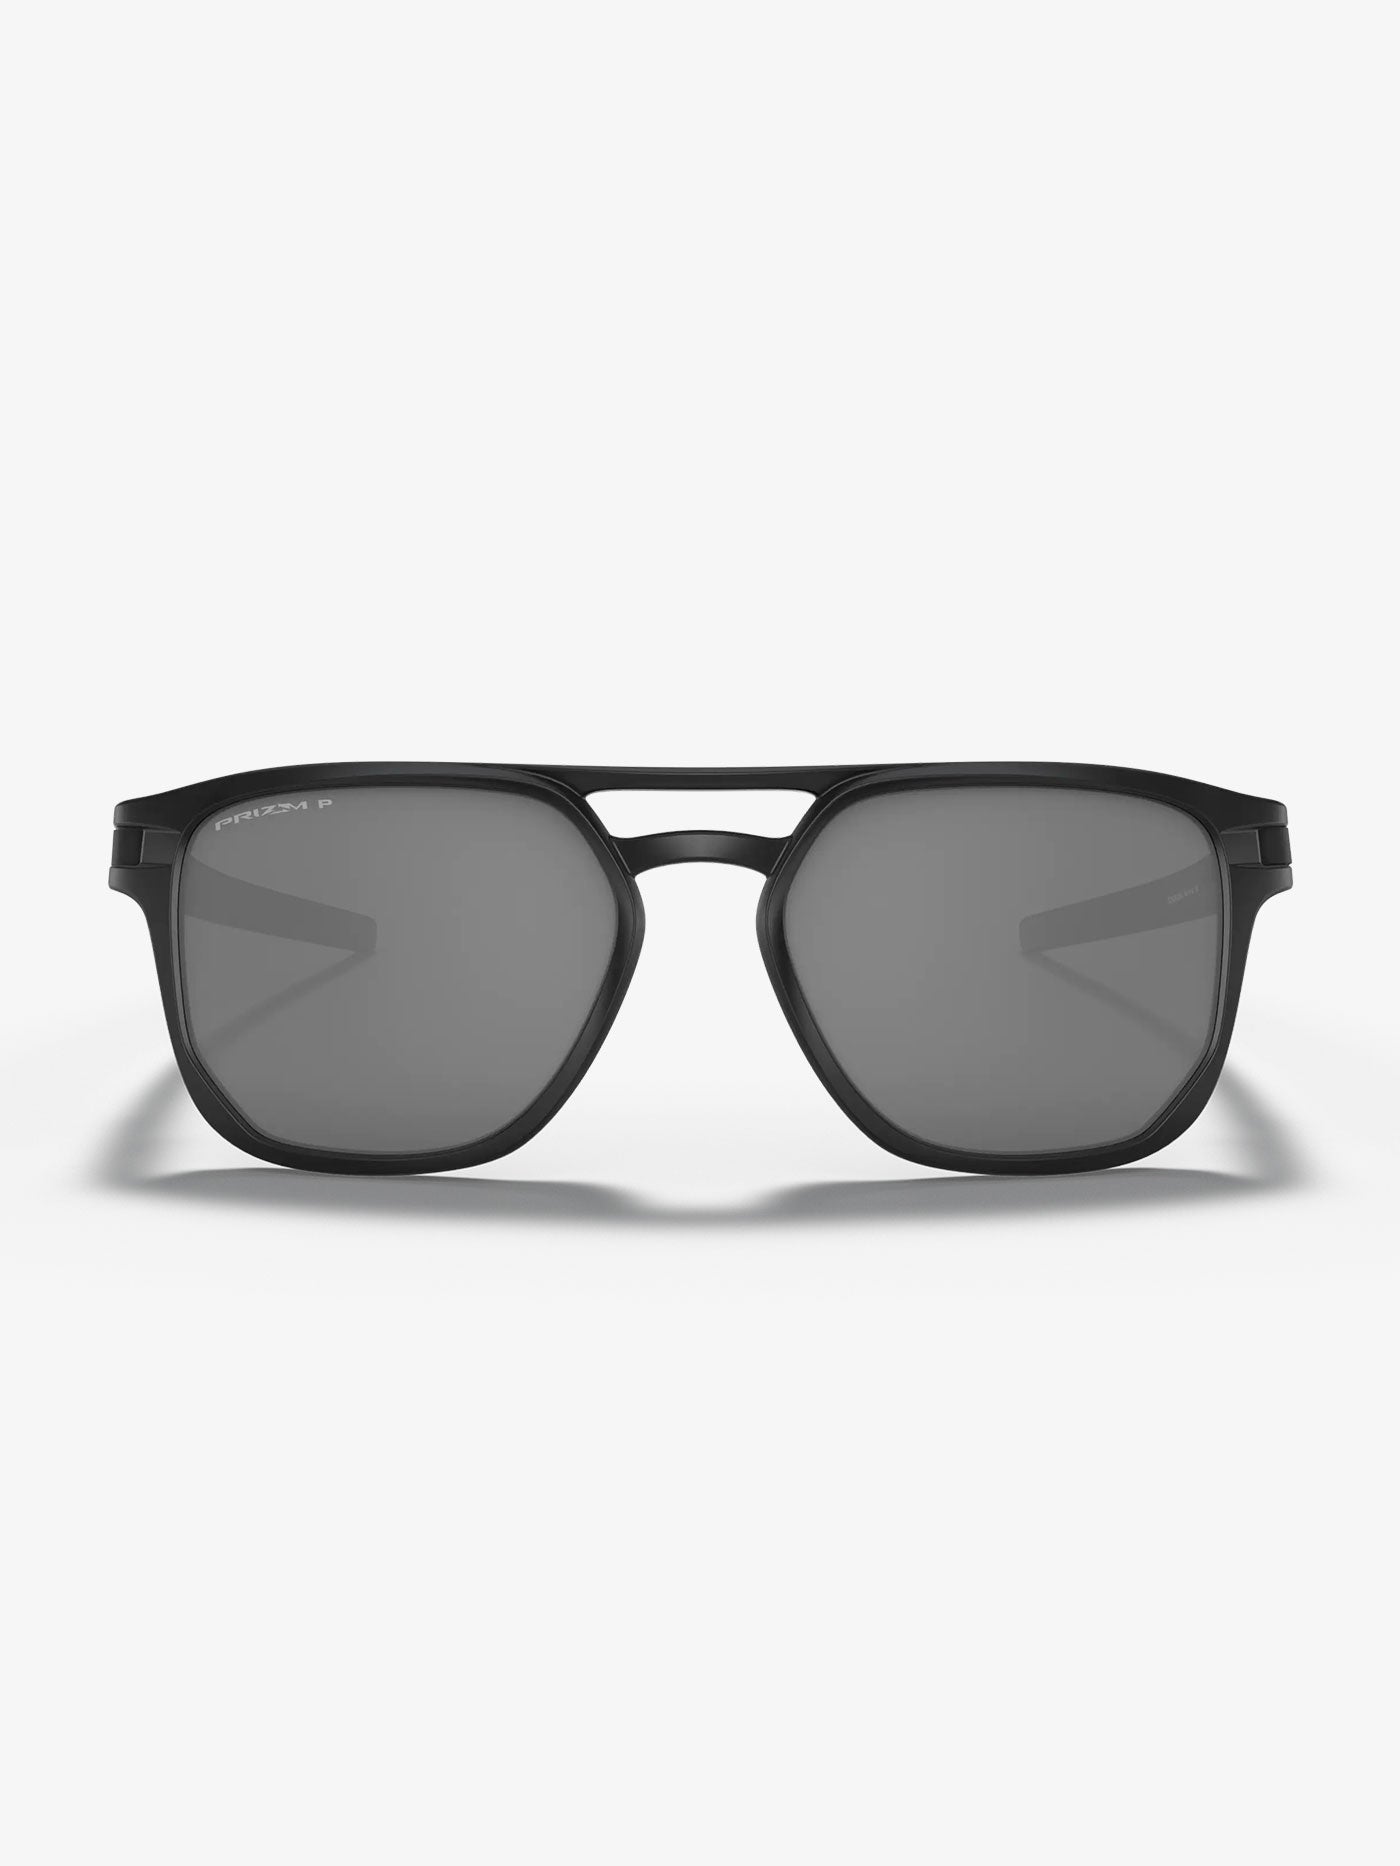 Oakley Latch Matte Black Prizm Black Irid Sunglasses